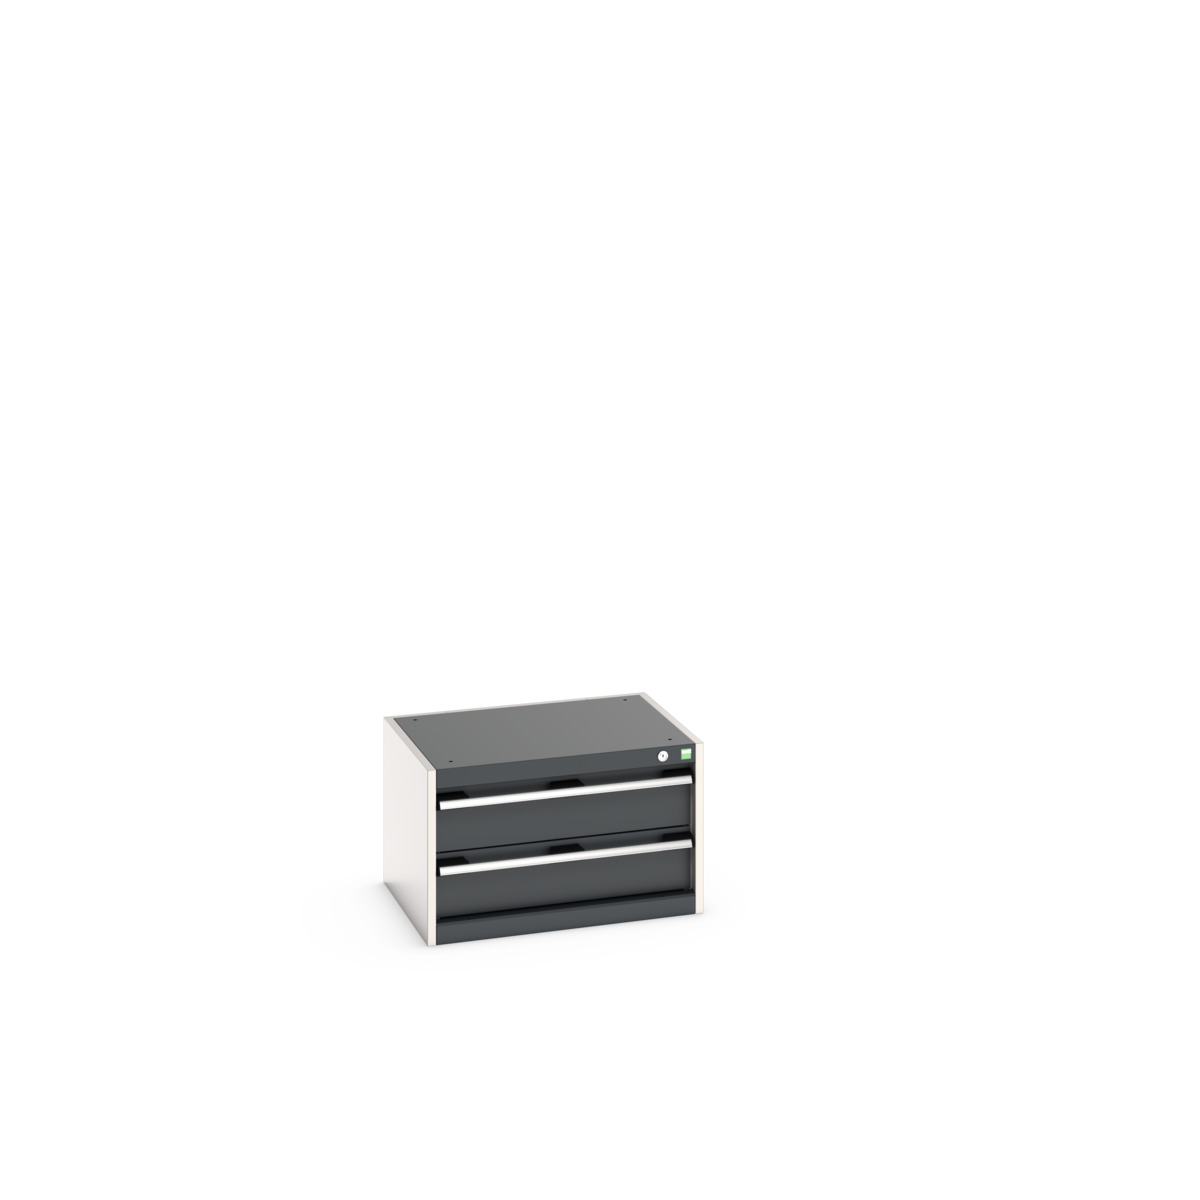 40011037. - cubio drawer cabinet